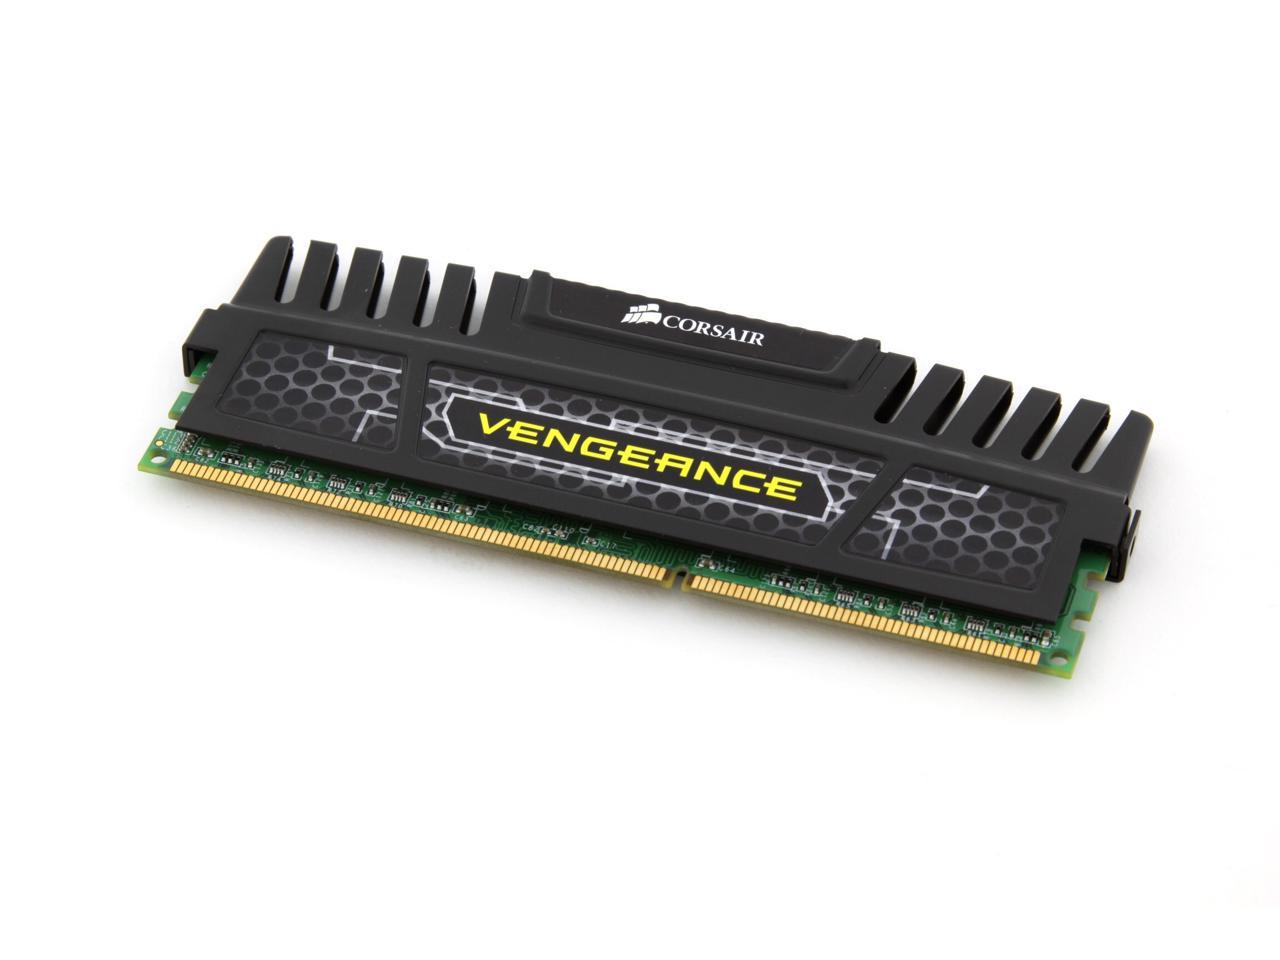 CORSAIR Vengeance 8GB 240-Pin PC RAM DDR3 1600 (PC3 12800) Desktop Memory  Model CMZ8GX3M1A1600C10